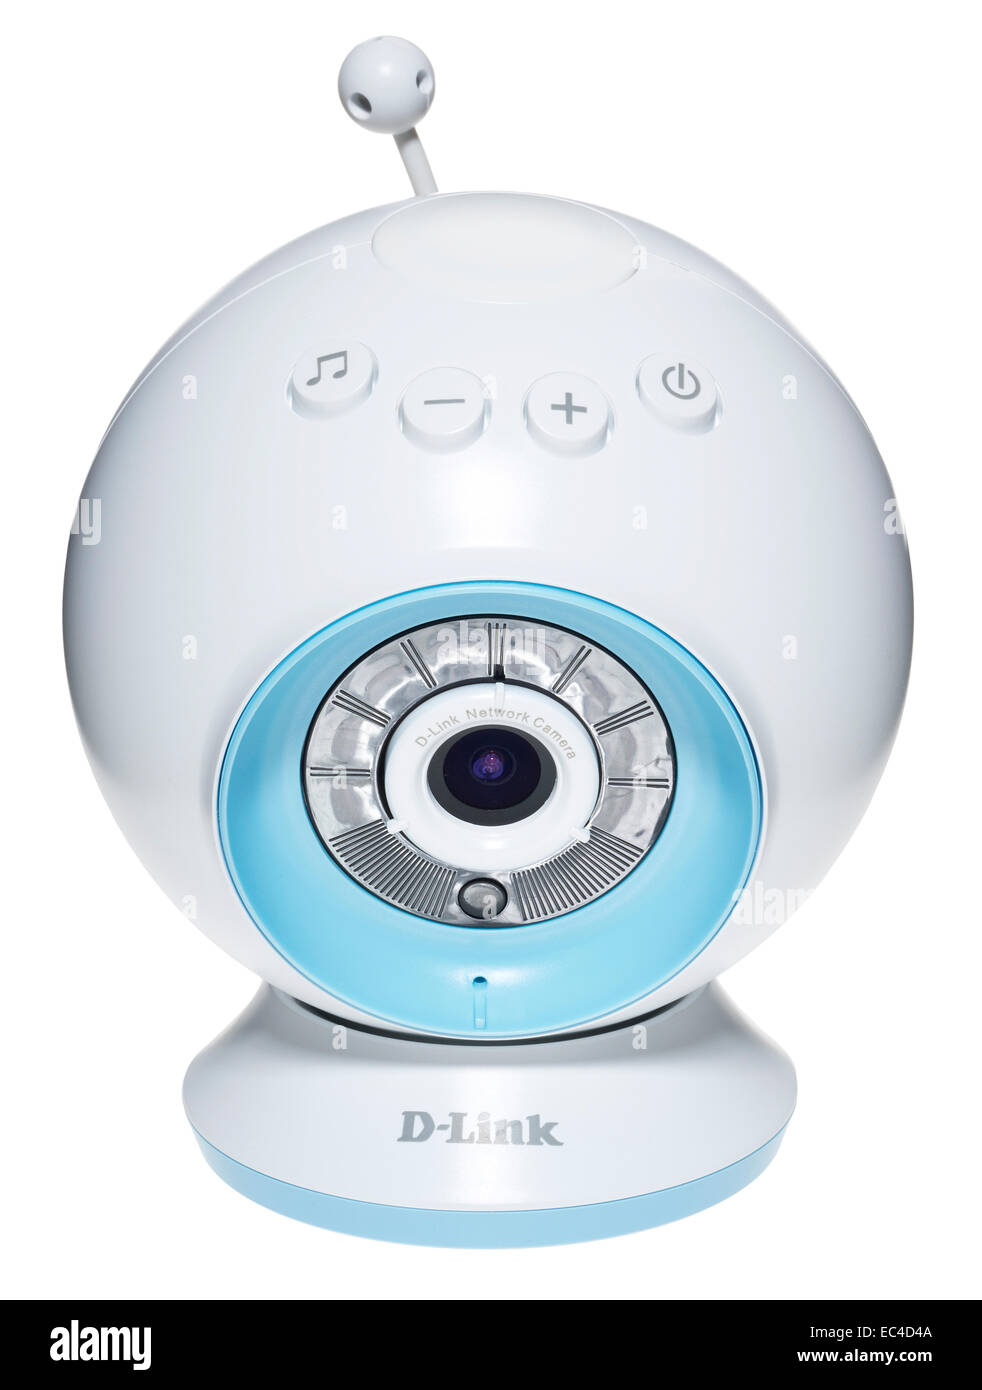 D Link baby monitor telecamera video. Baby webcam. Accesso wireless a internet bambino monitor. Foto Stock